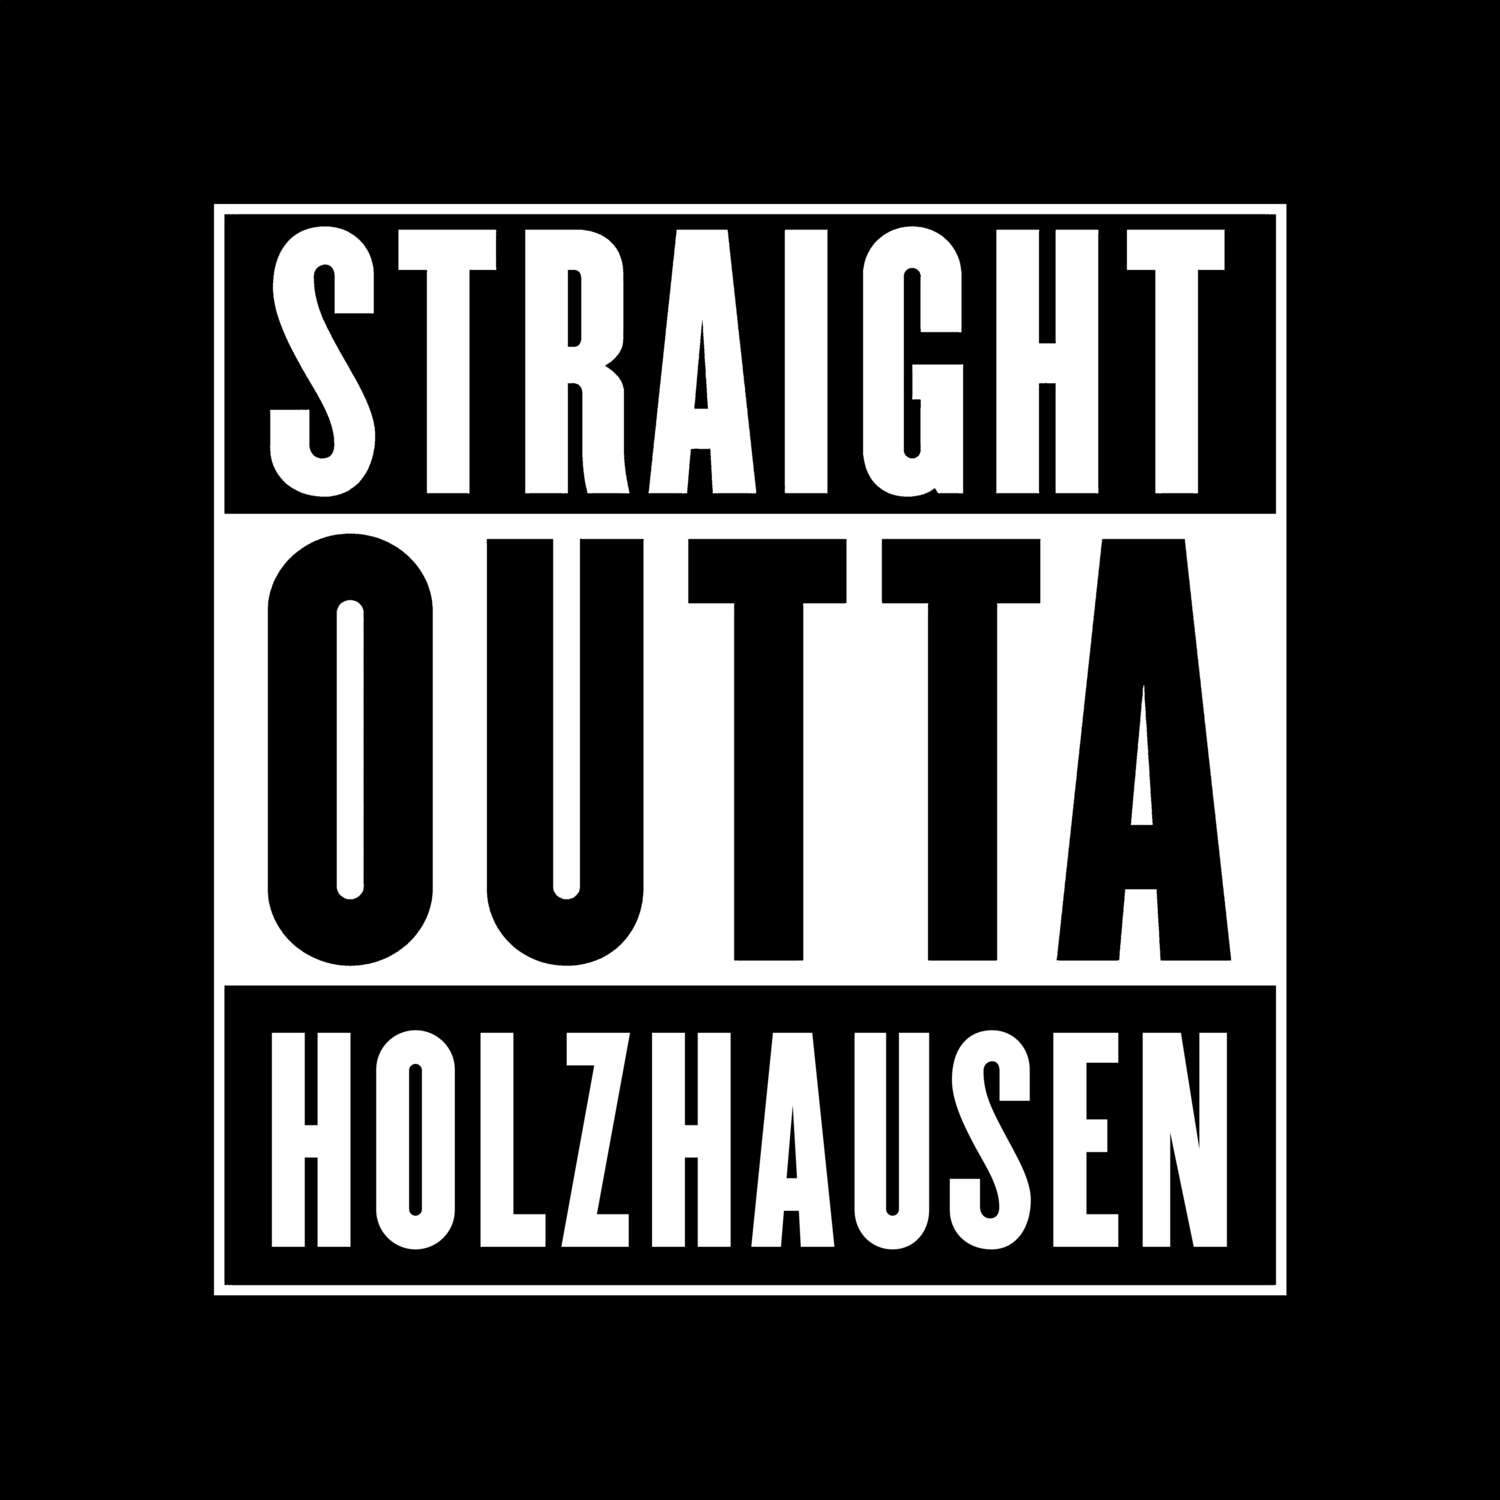 Holzhausen T-Shirt »Straight Outta«